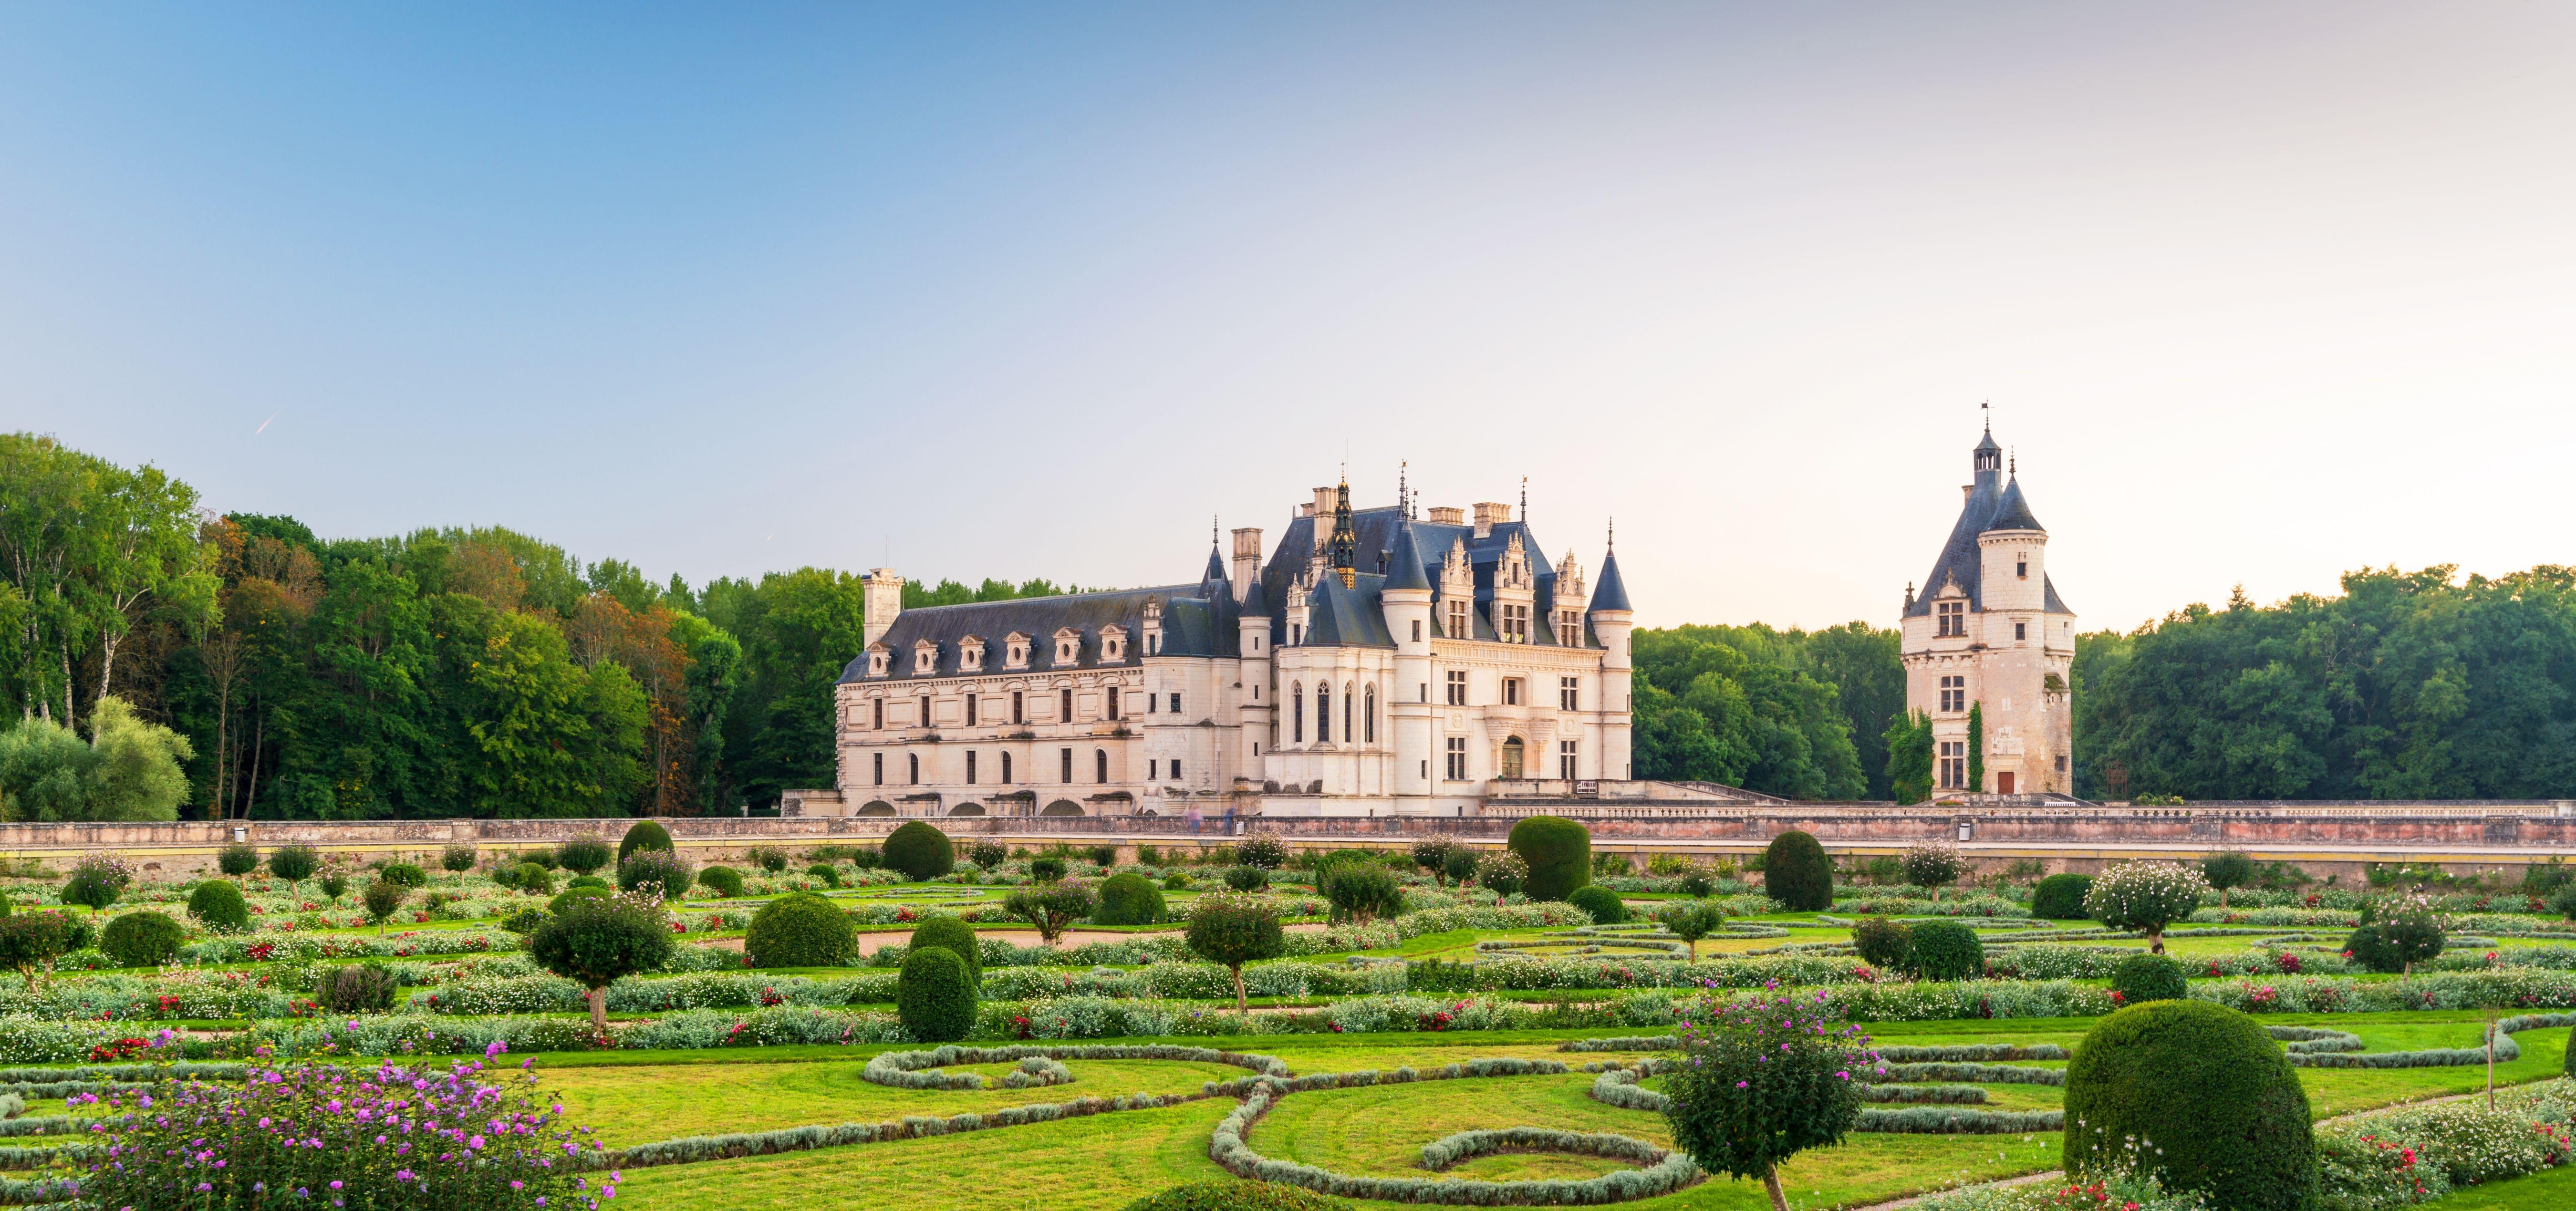 Beautiful Chateau de Chenonceau in Loire Valley